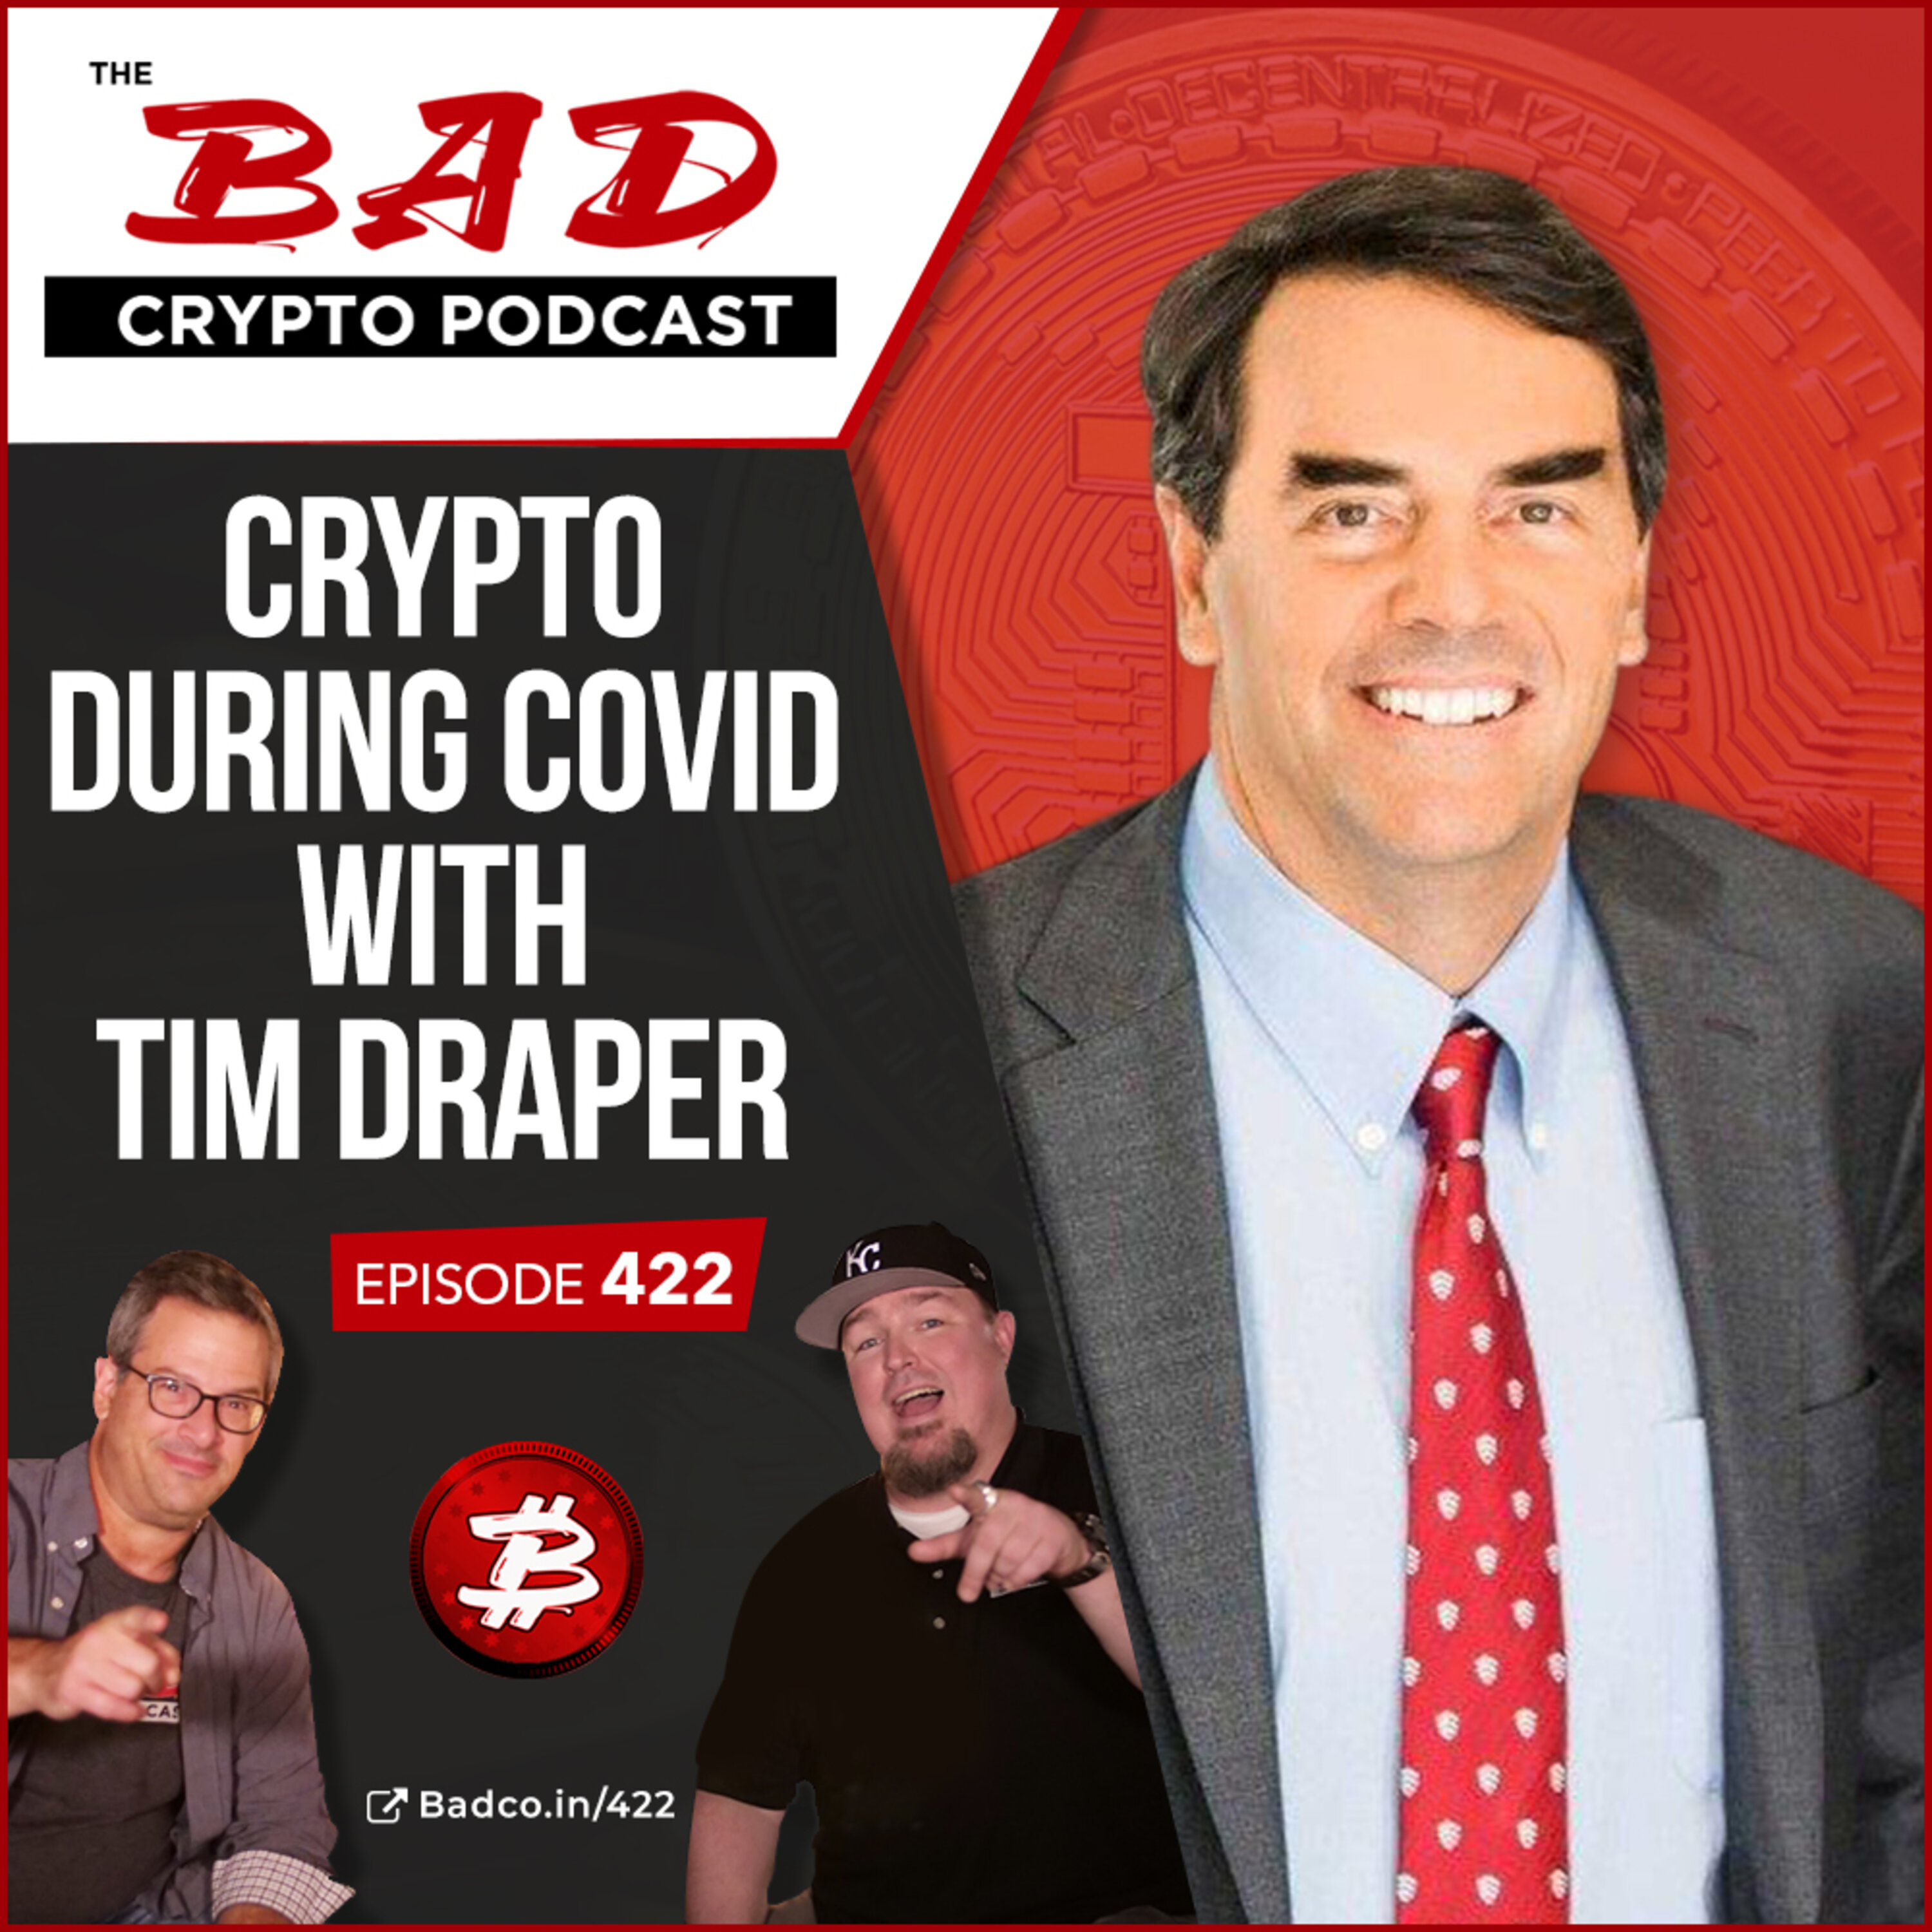 The bad crypto podcast обмен валюты правила